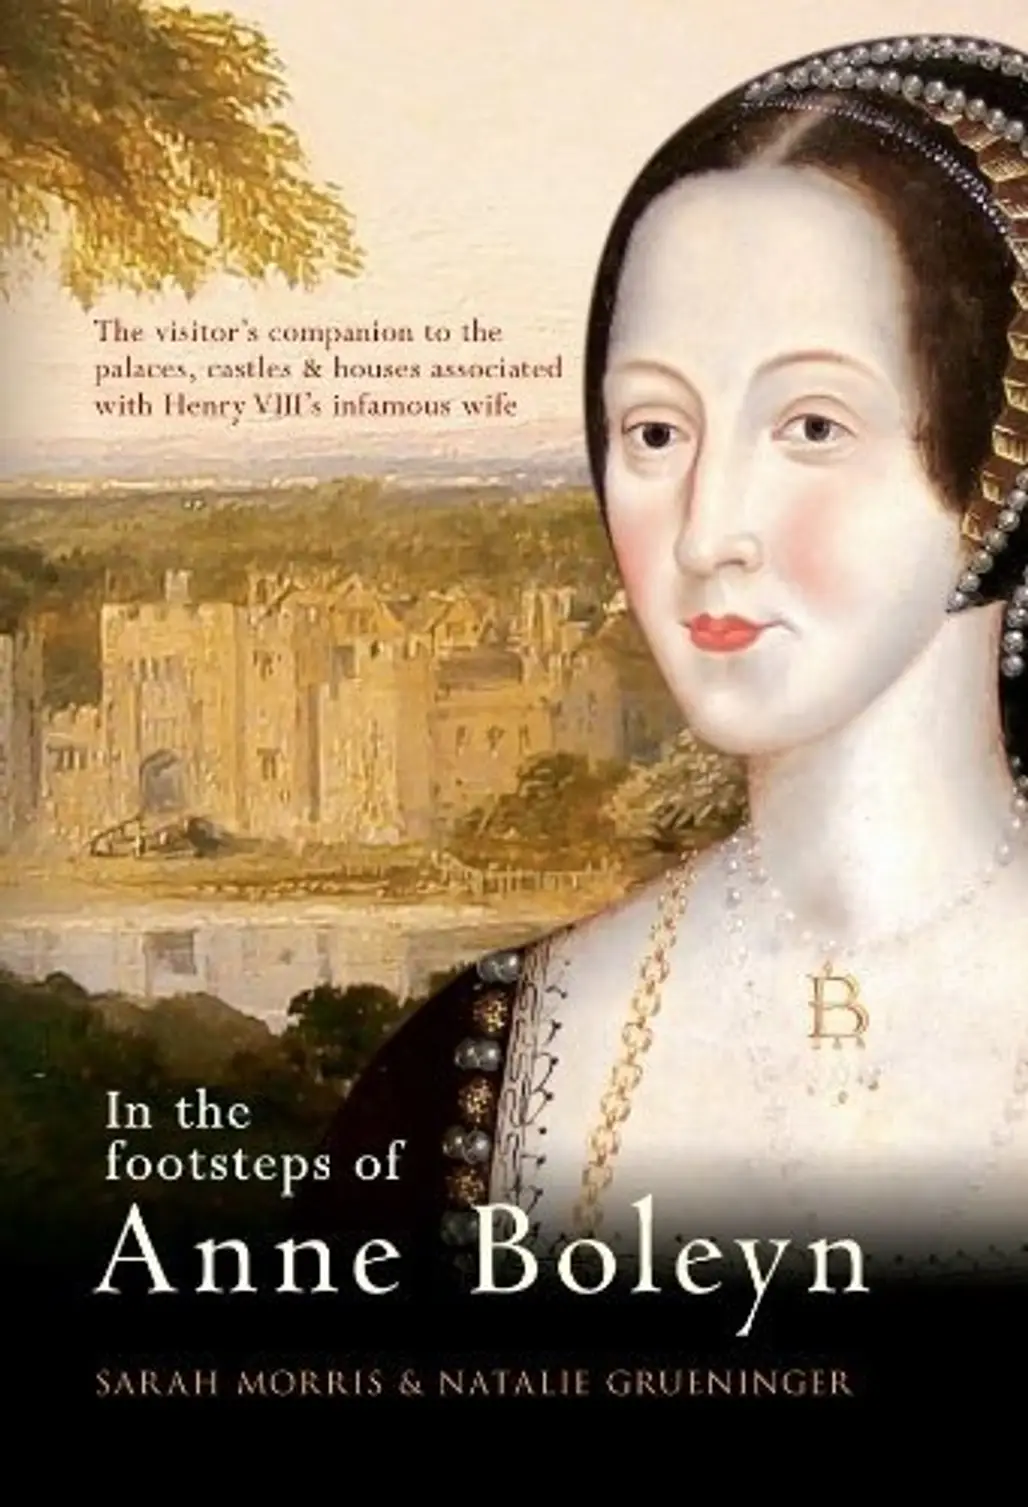 In the Footsteps of Anne Boleyn (Sarah Morris & Natalie Grueninger)